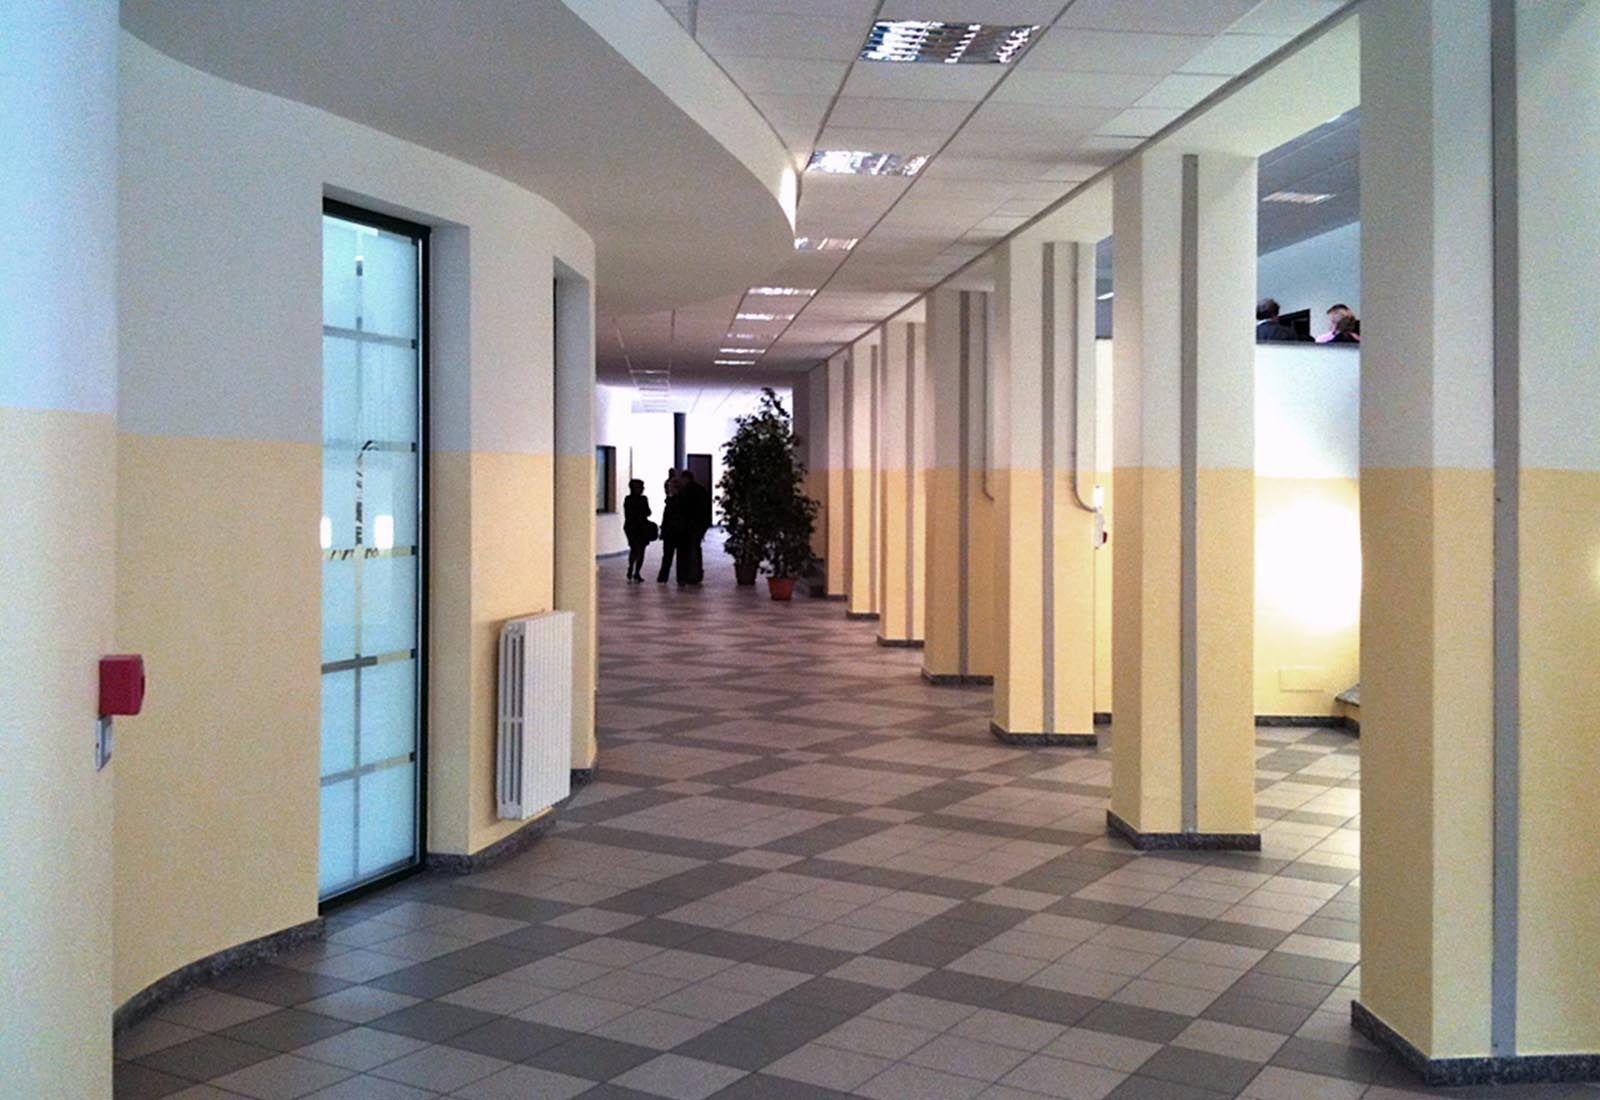 Manzoni school center in Milan - The hall